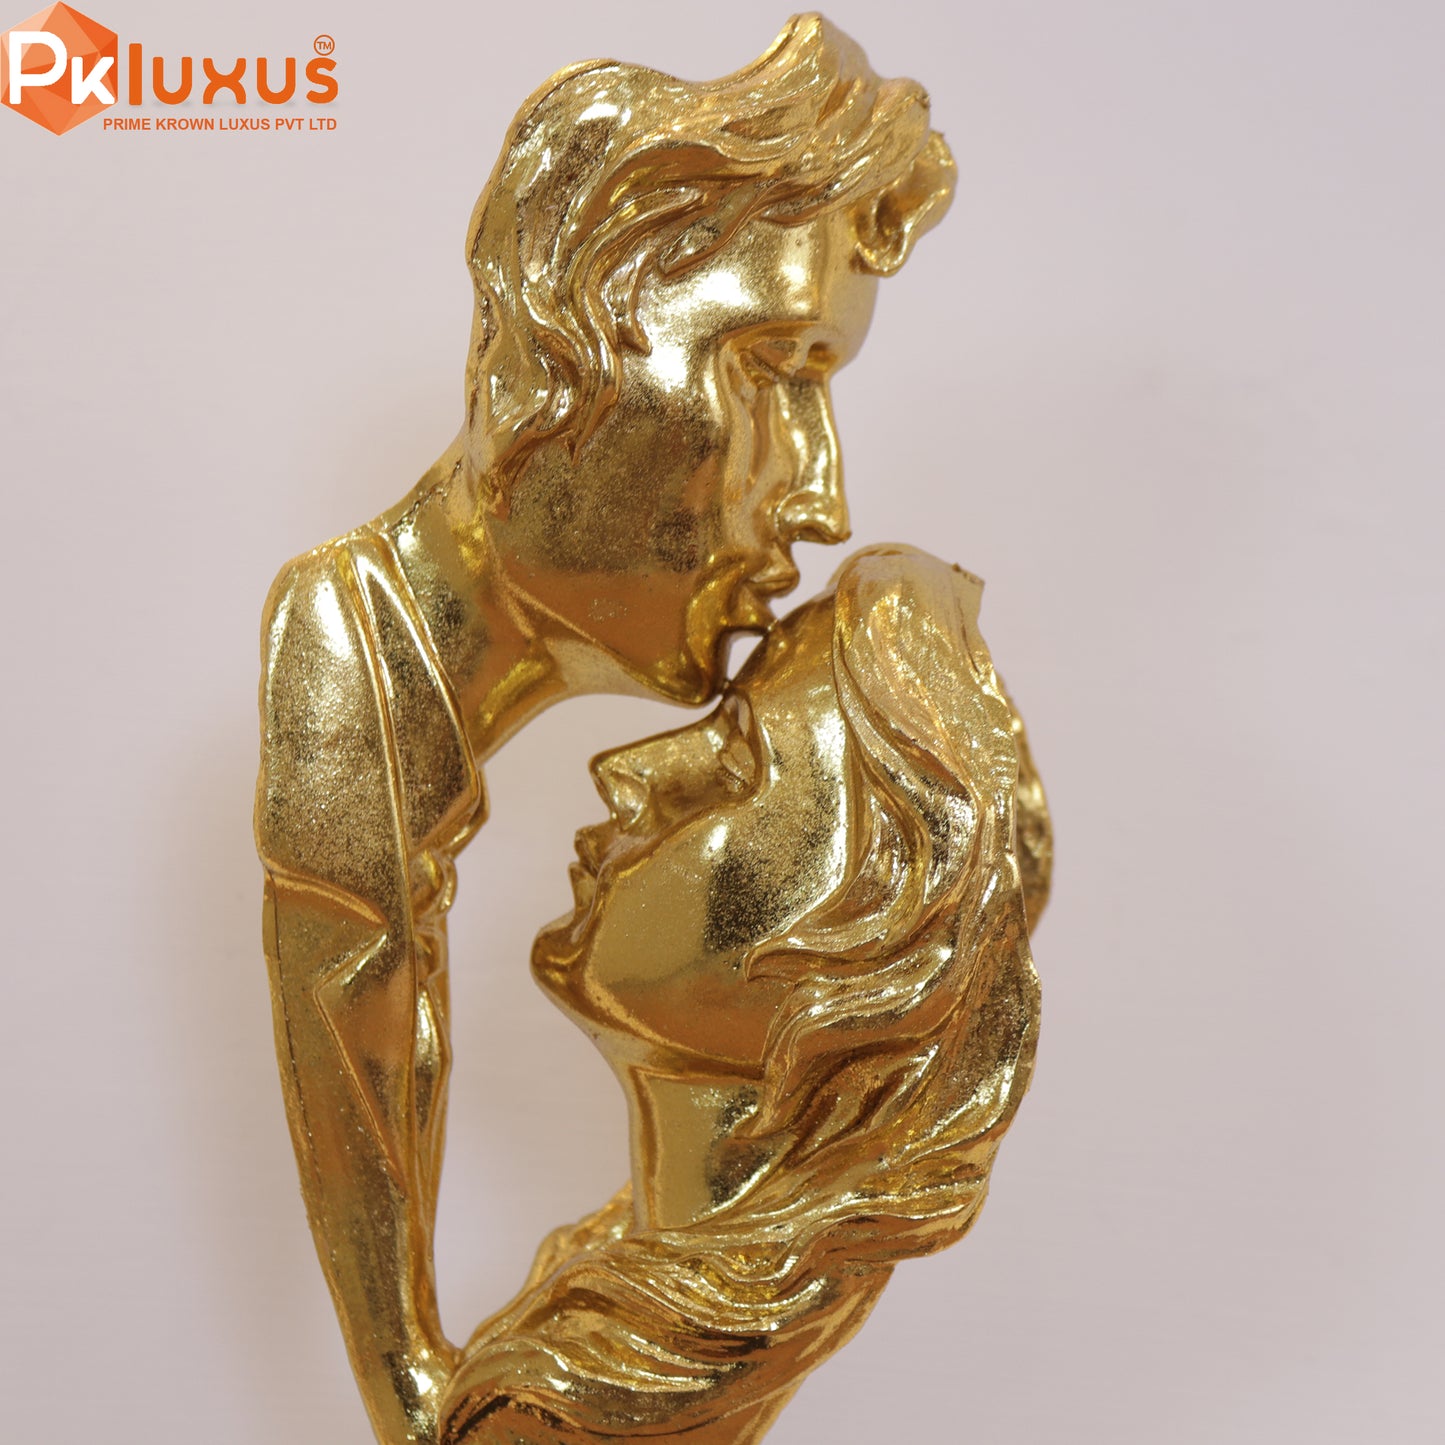 Big Lovers Statue Kissing Sculpture By PK LUXUS™ - PK LUXUS